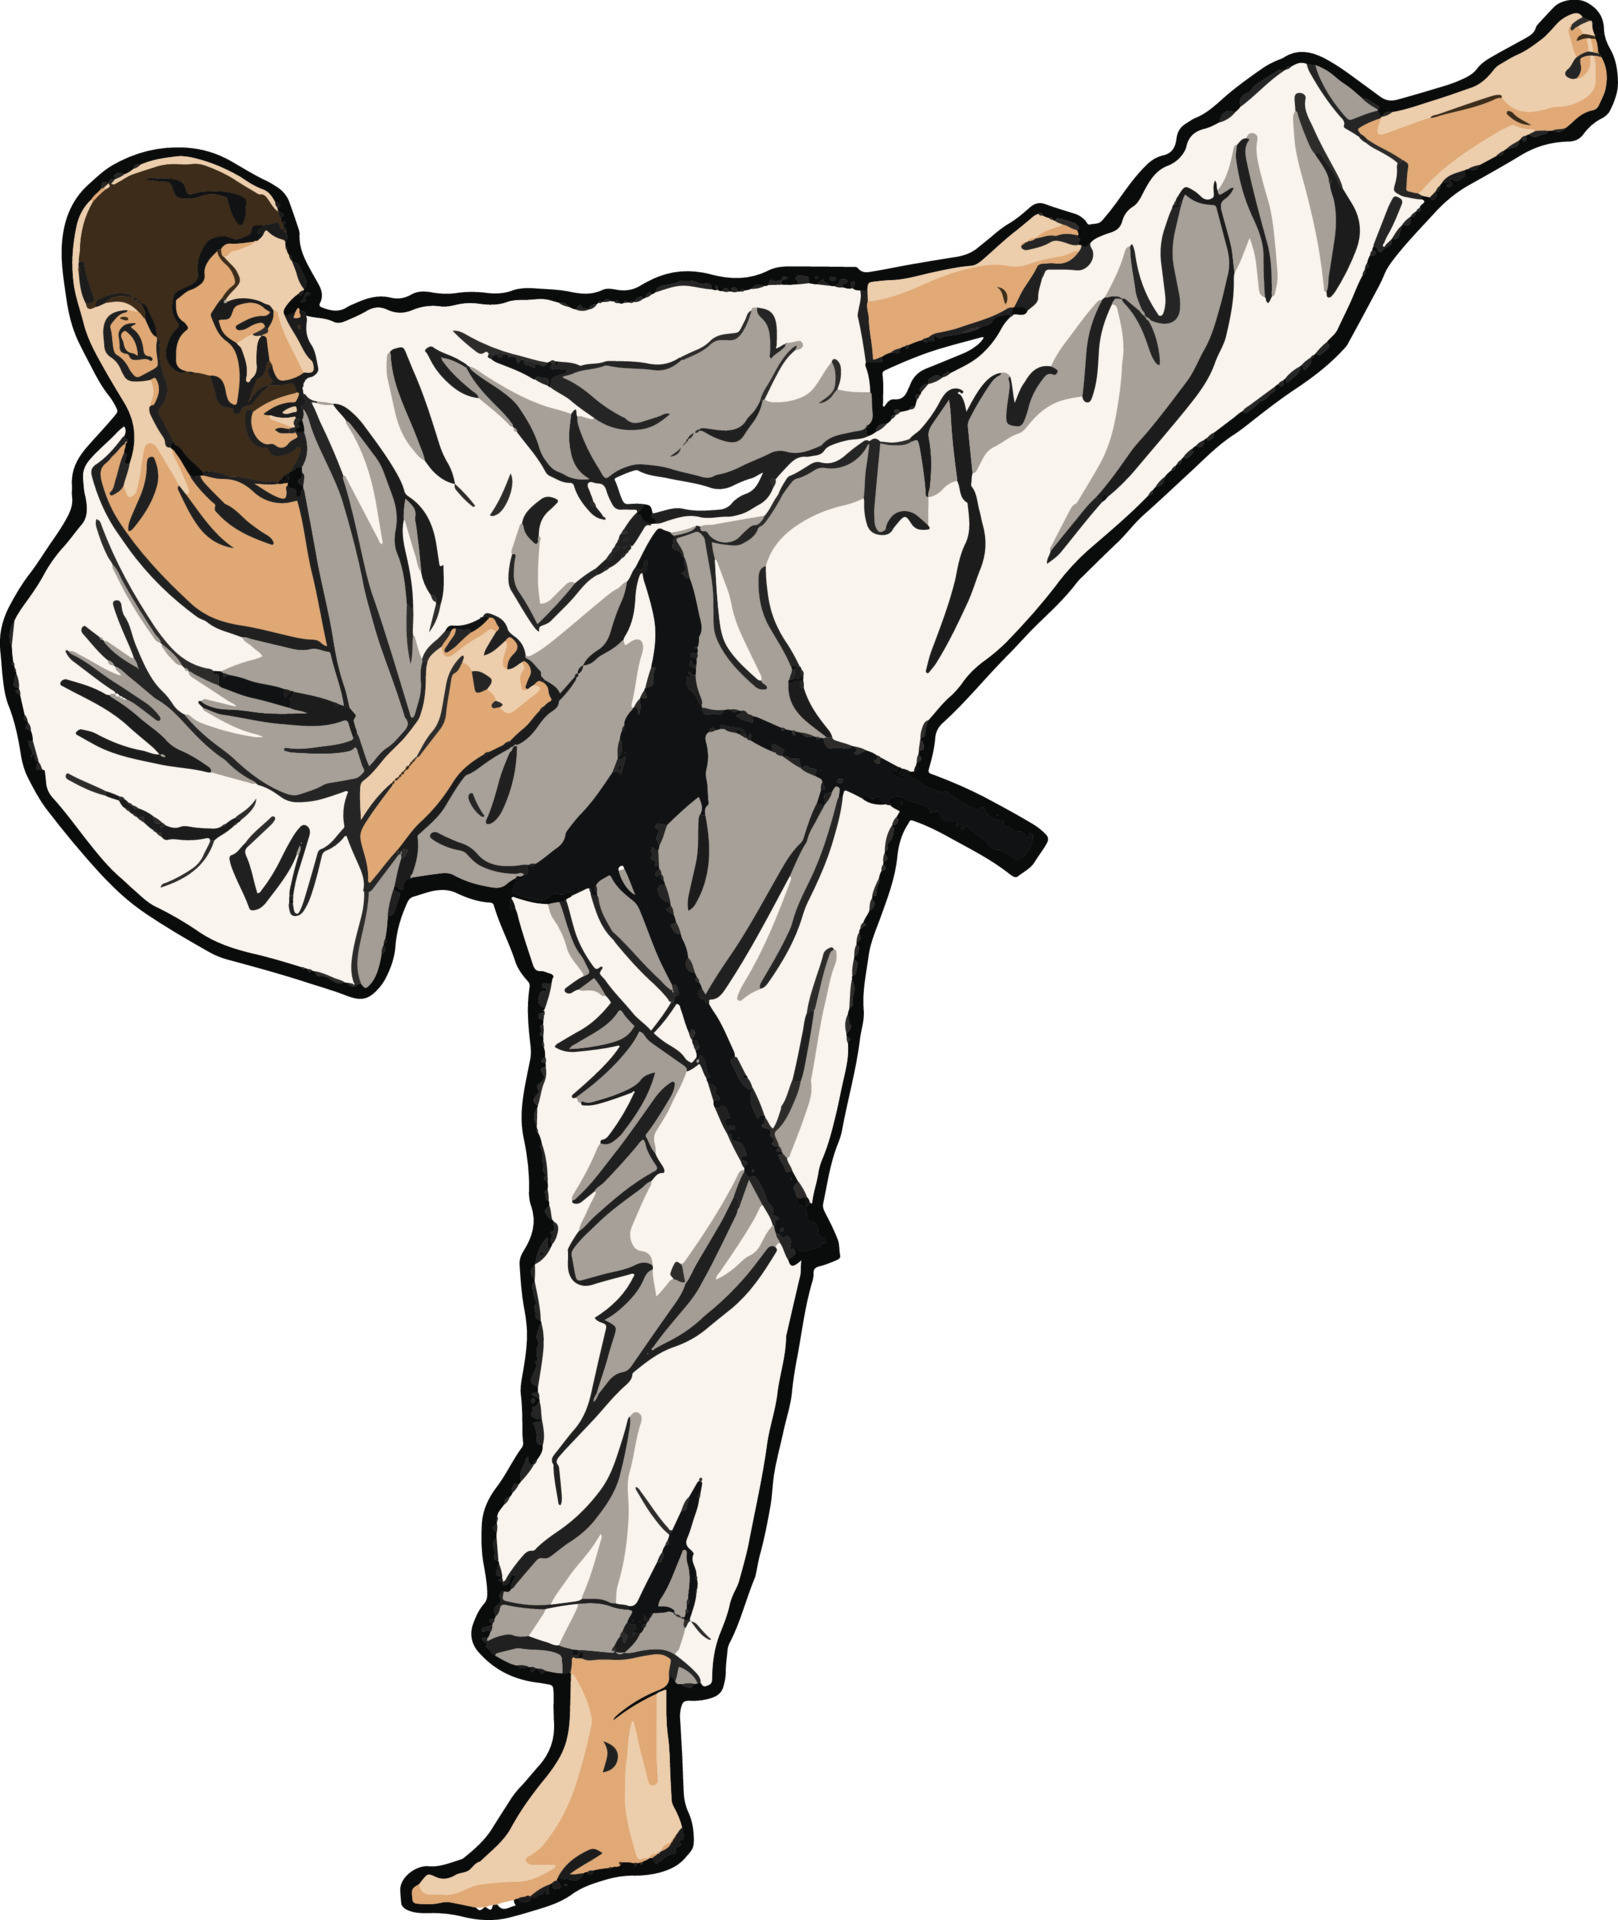 Download Karate Cartoon Man Kick Wallpaper 